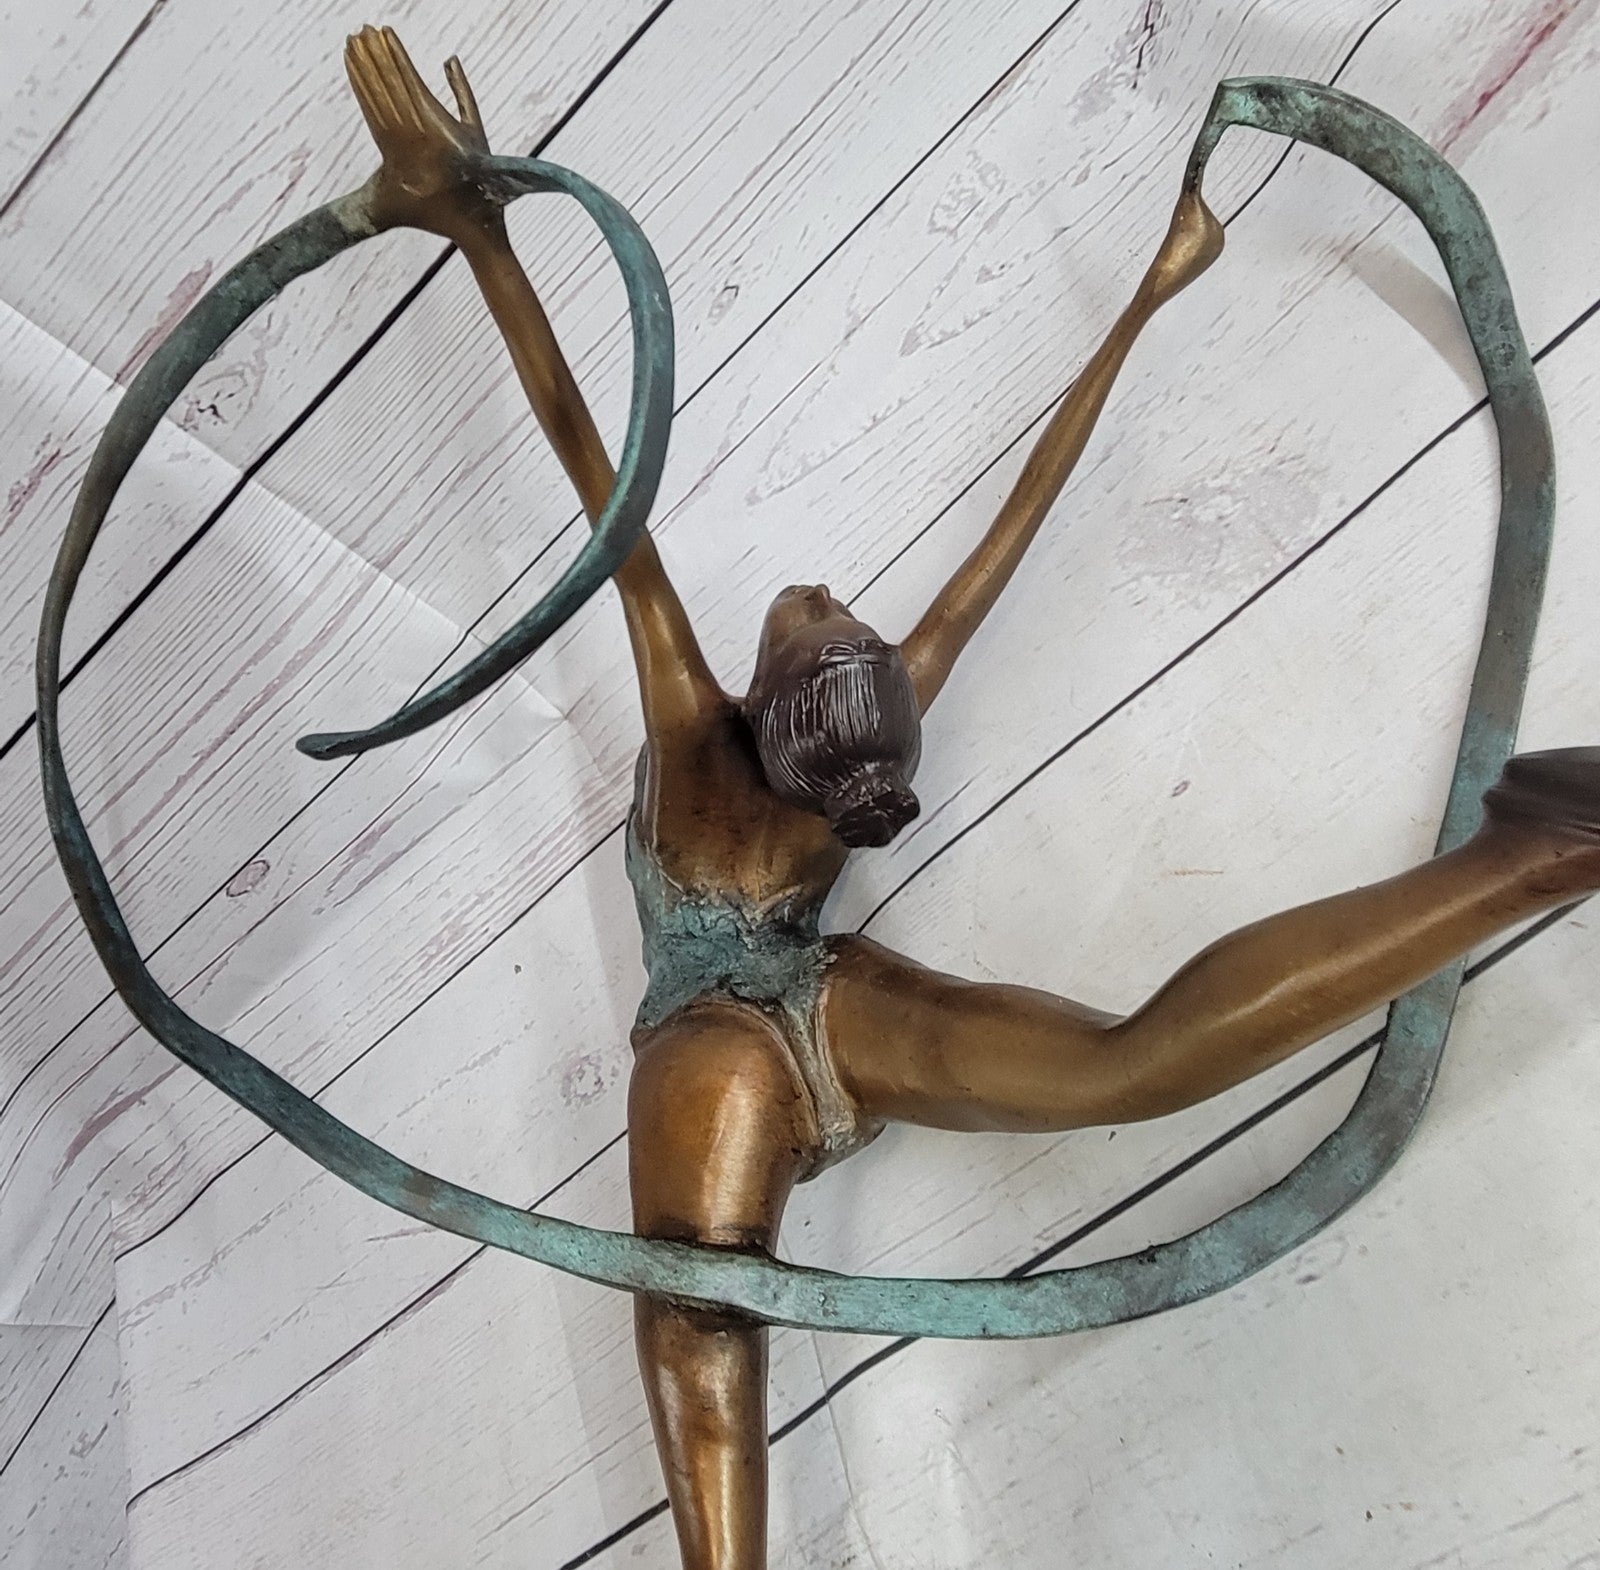 Statue gymnaste danseur de bronze sculpture figurine 55 cm Home Decoration Decor